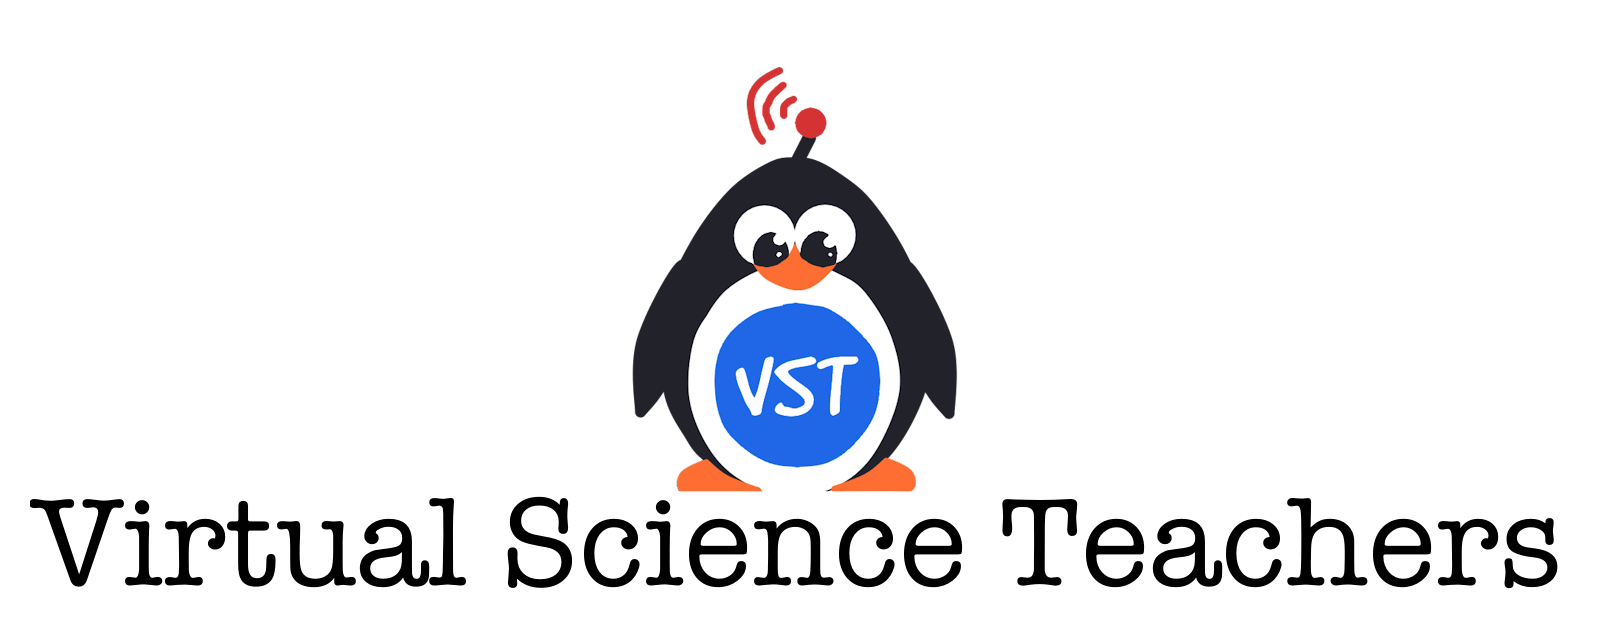 Virtual Science Teachers logo